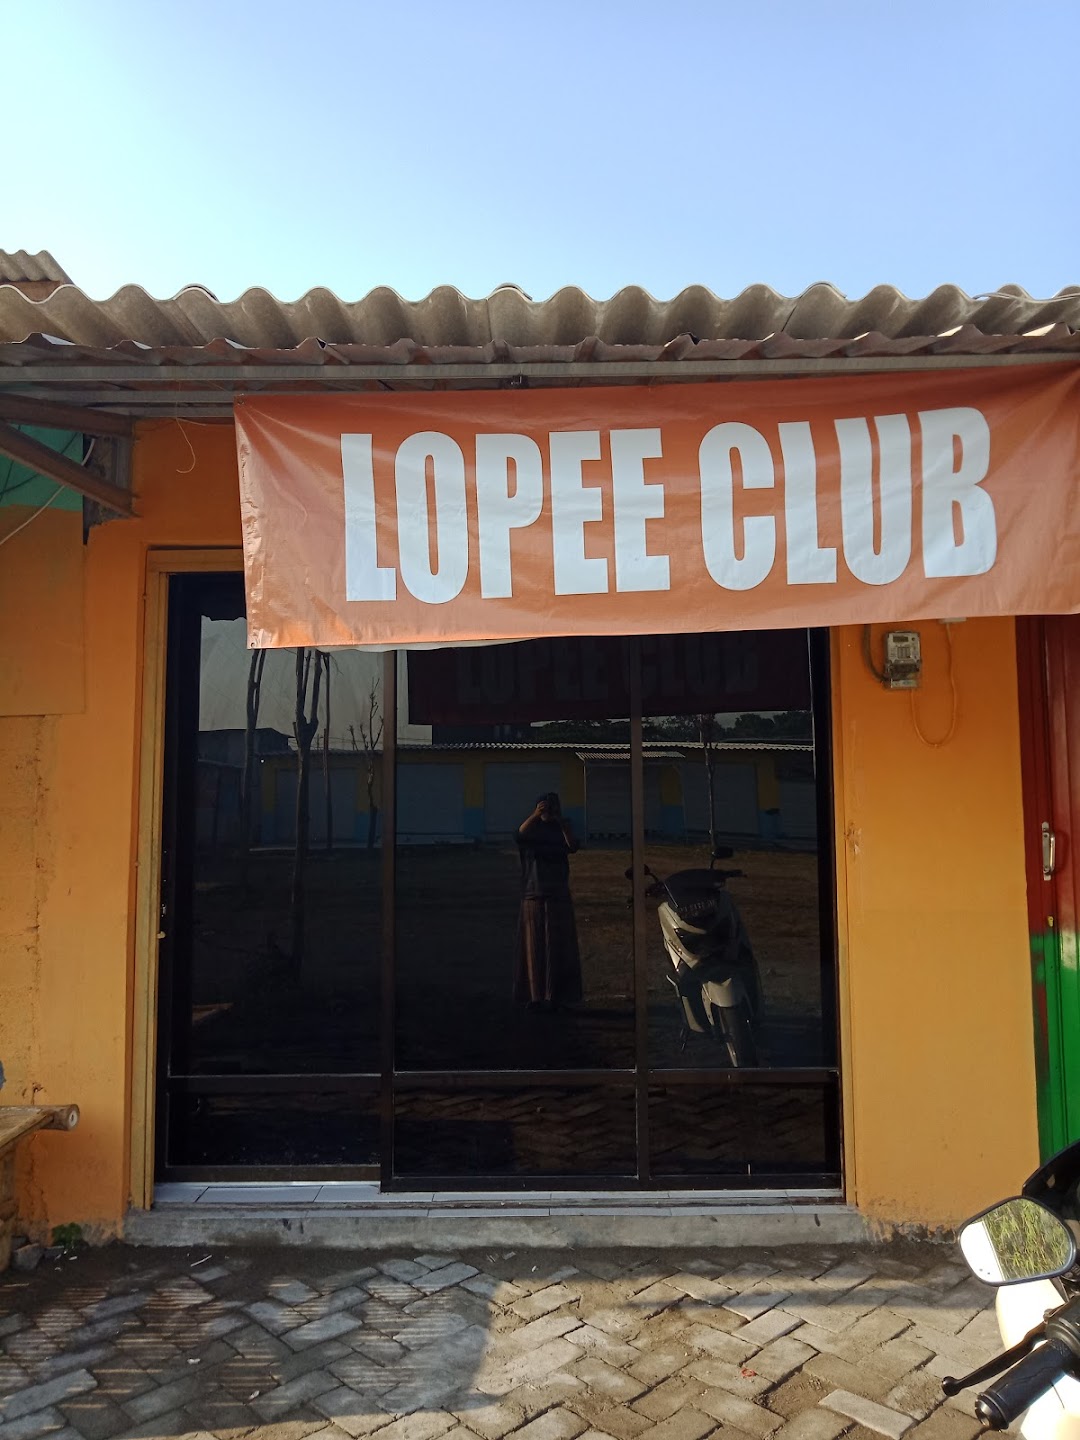 LOPEE CLUB